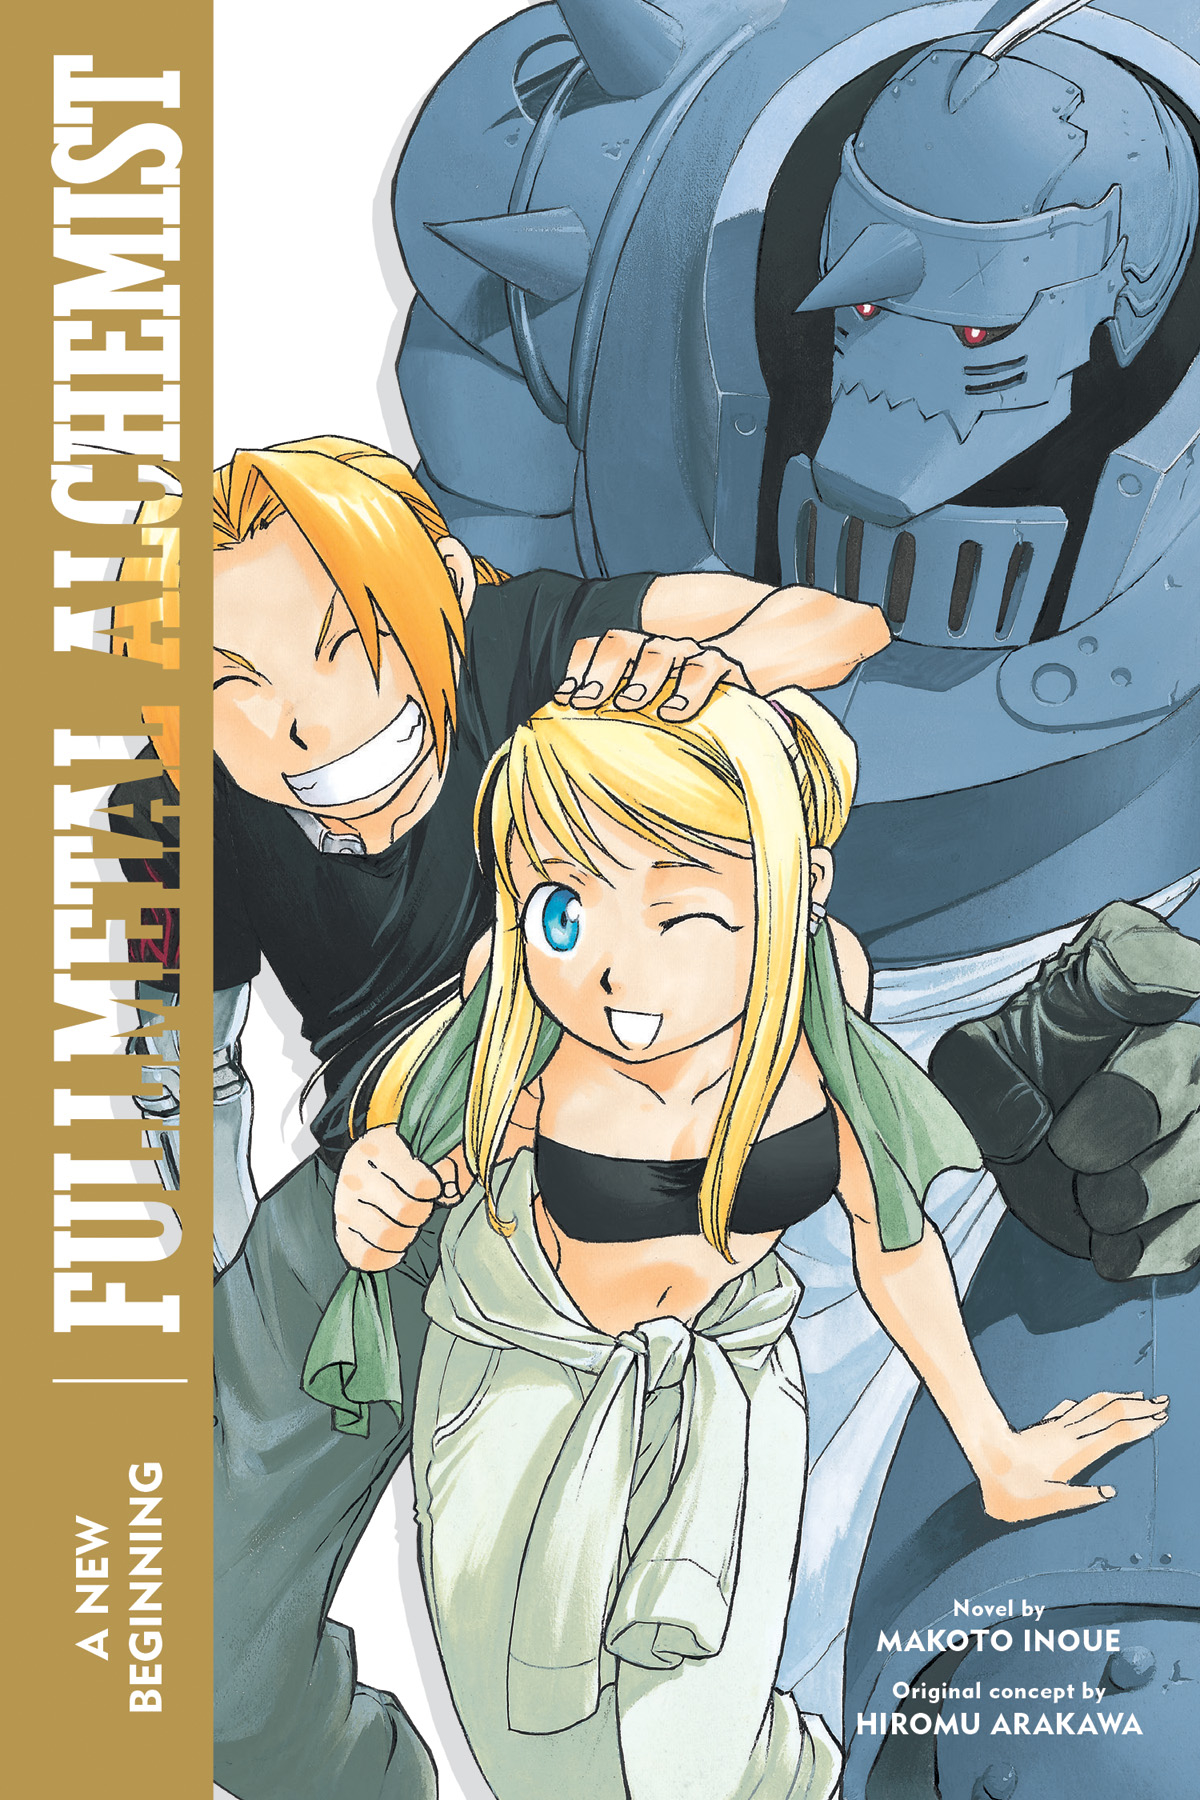 Fullmetal Alchemist Novel Volume 6 - A New Beginning